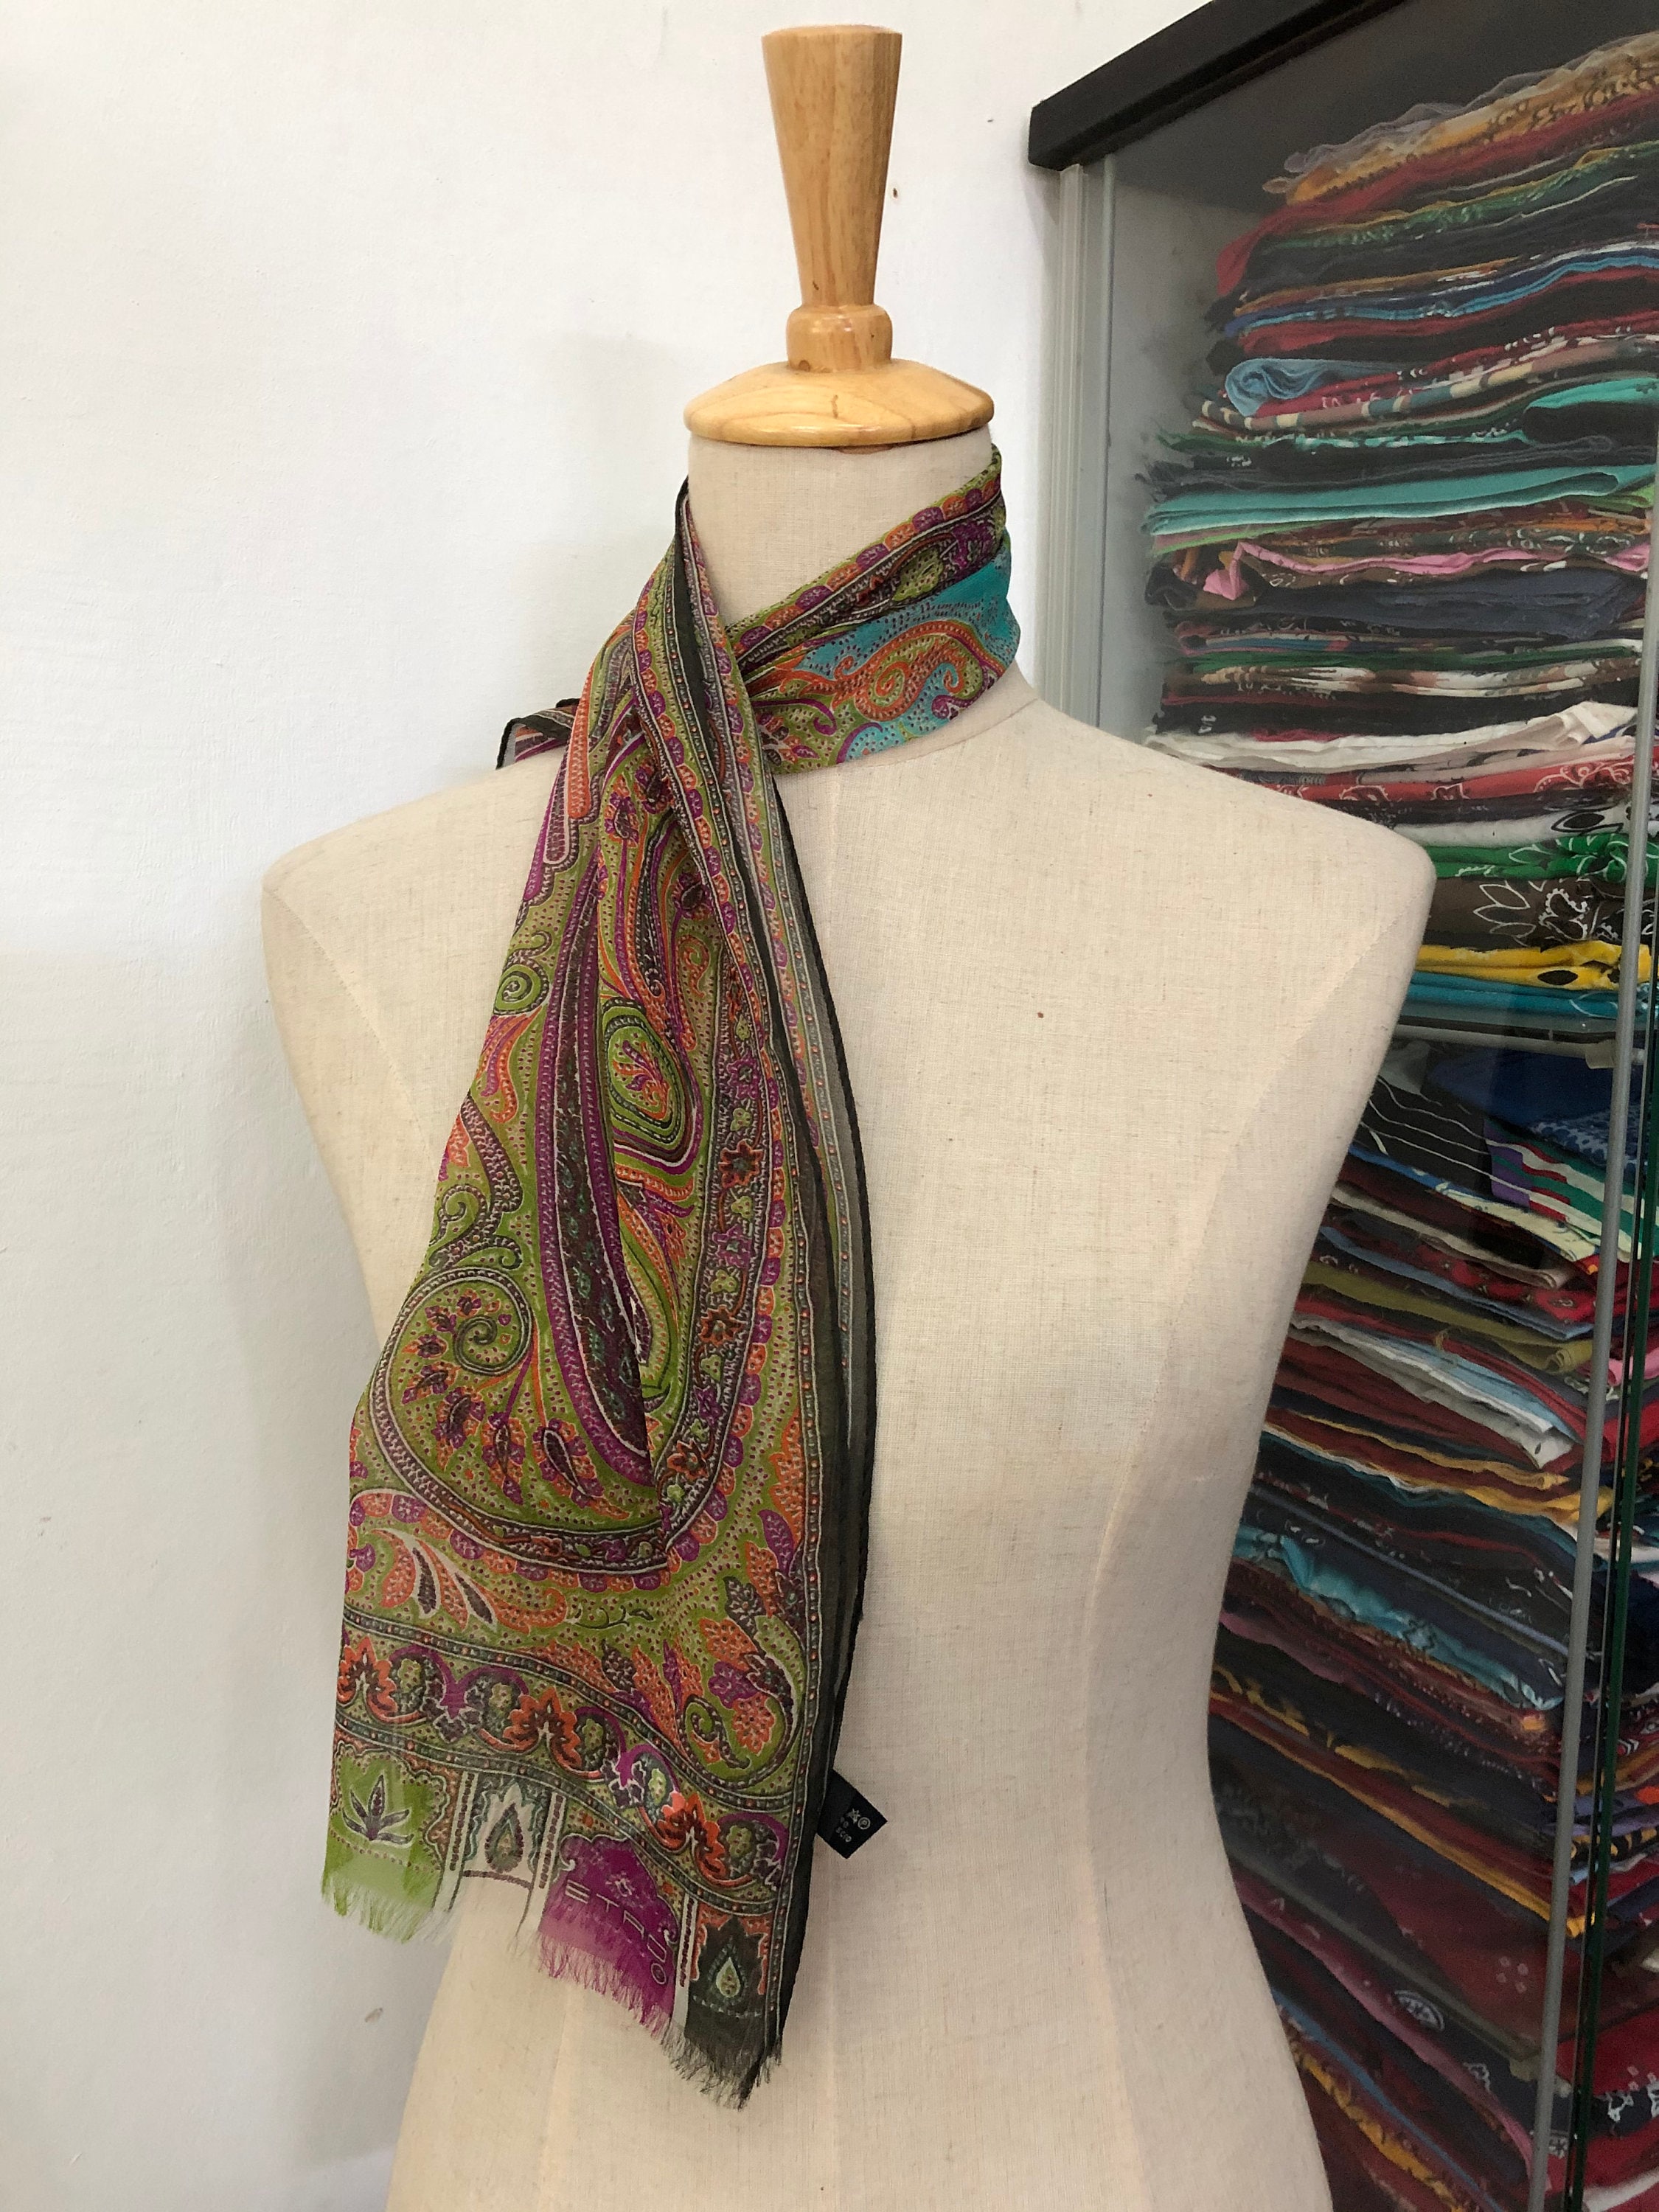 Etro Paisley Wool Silk Scarf, $365, Nordstrom